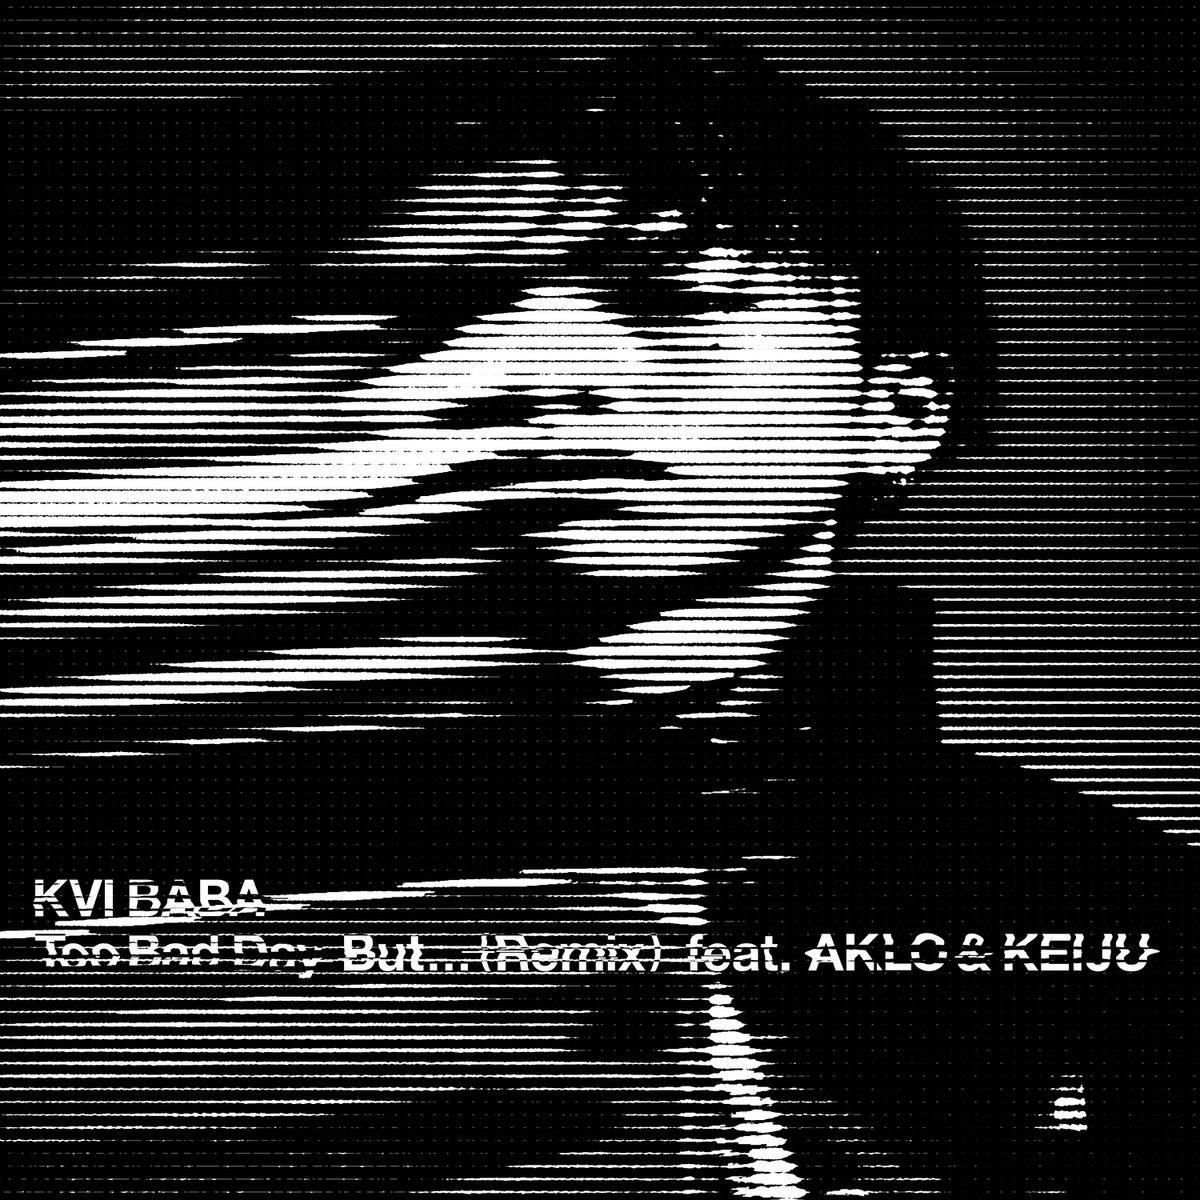 『Kvi Baba - Too Bad Day But... (Remix) feat. AKLO & KEIJU』収録の『Too Bad Day But... (Remix) feat. AKLO & KEIJU』ジャケット